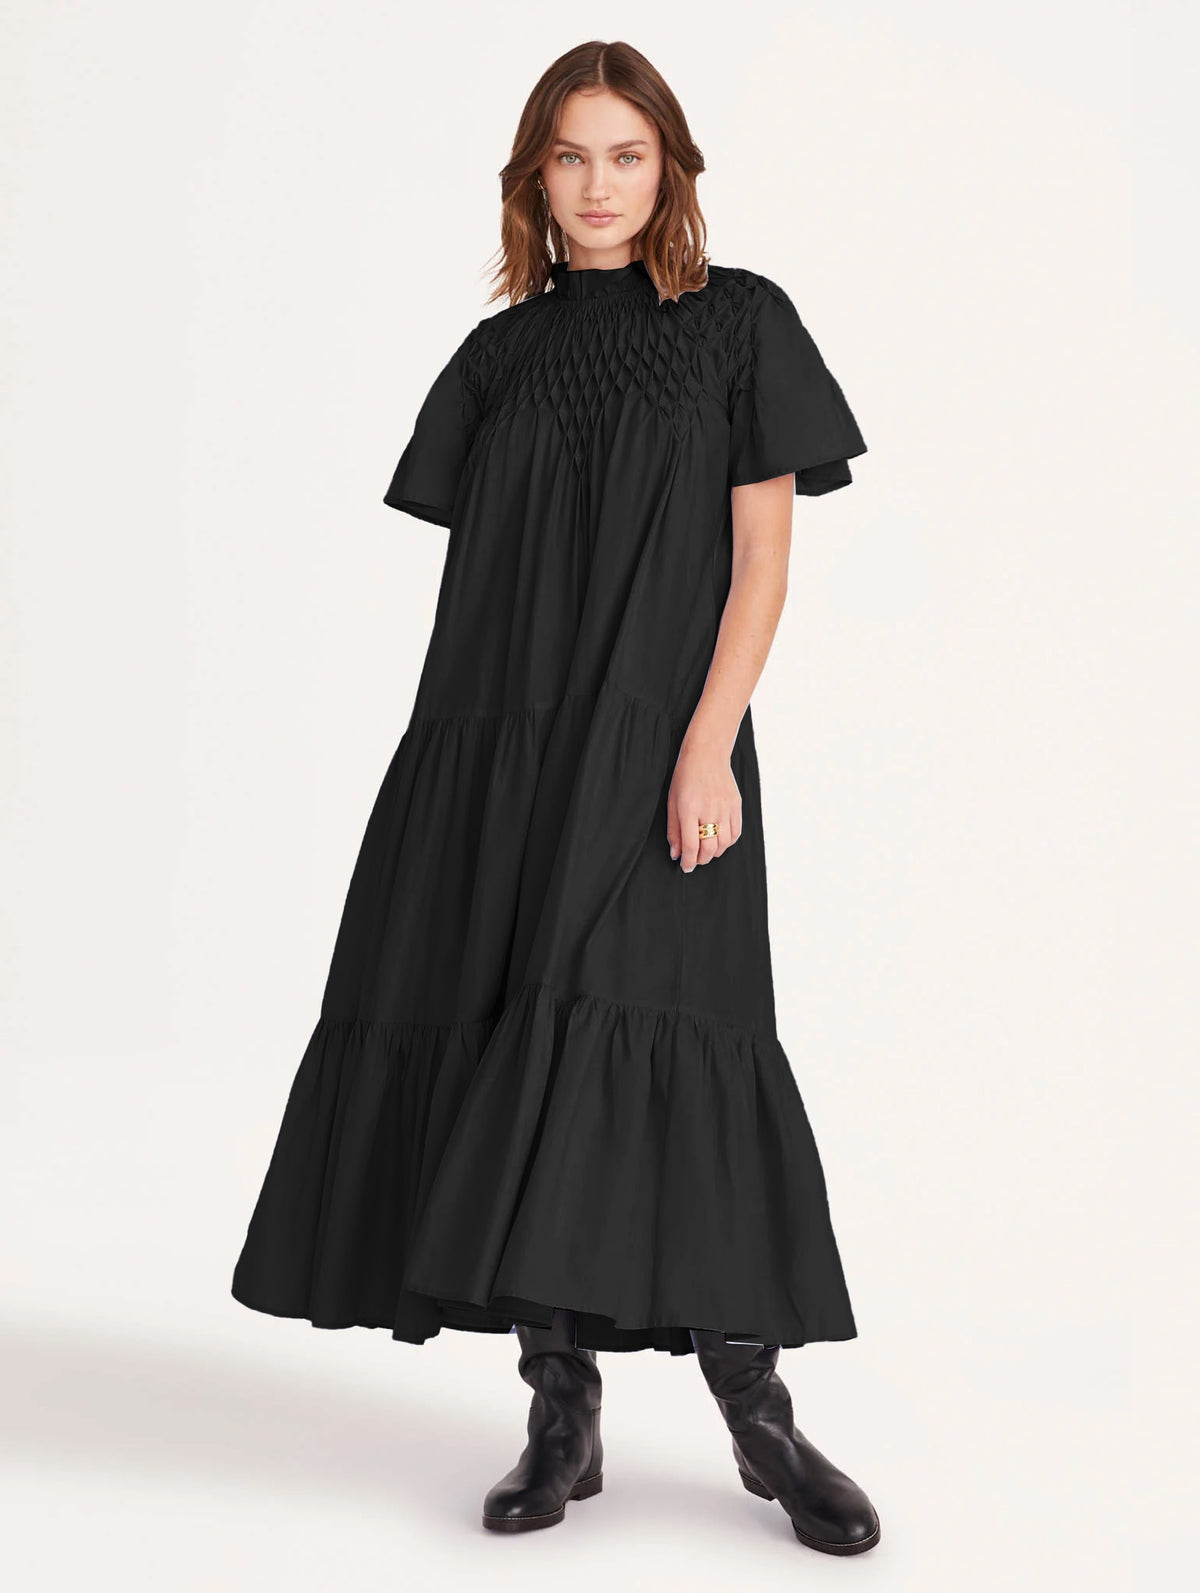 Bejart Dress in Black